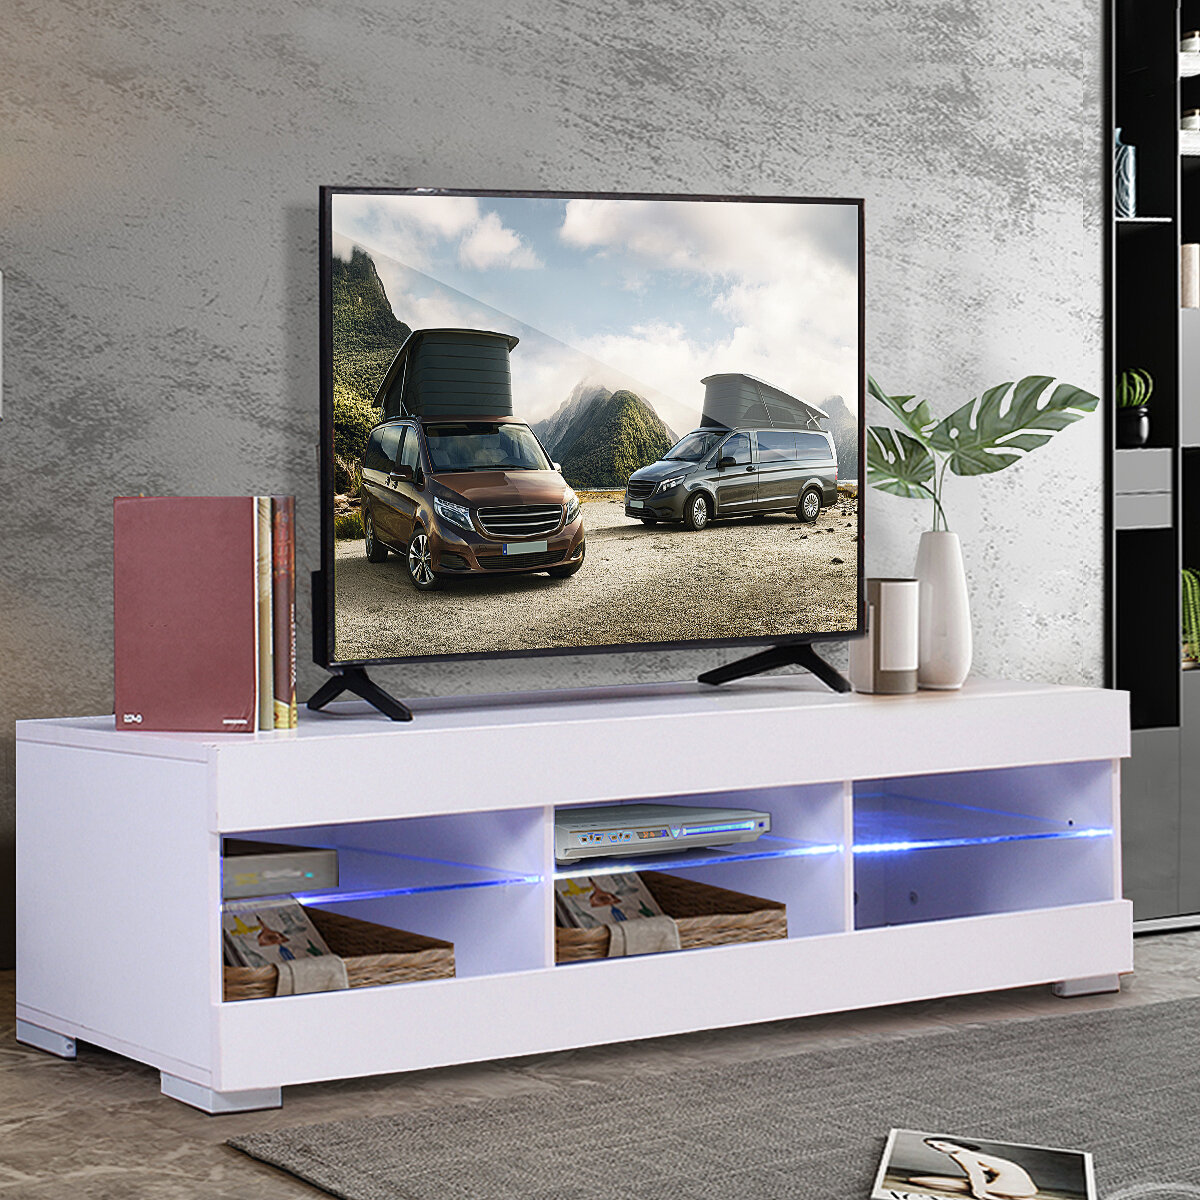 Woodyhome 57 "Hoogglans TV-standaard met LED-verlichting 6 Open Lagen Kast Moderne Opslag Houder Ent